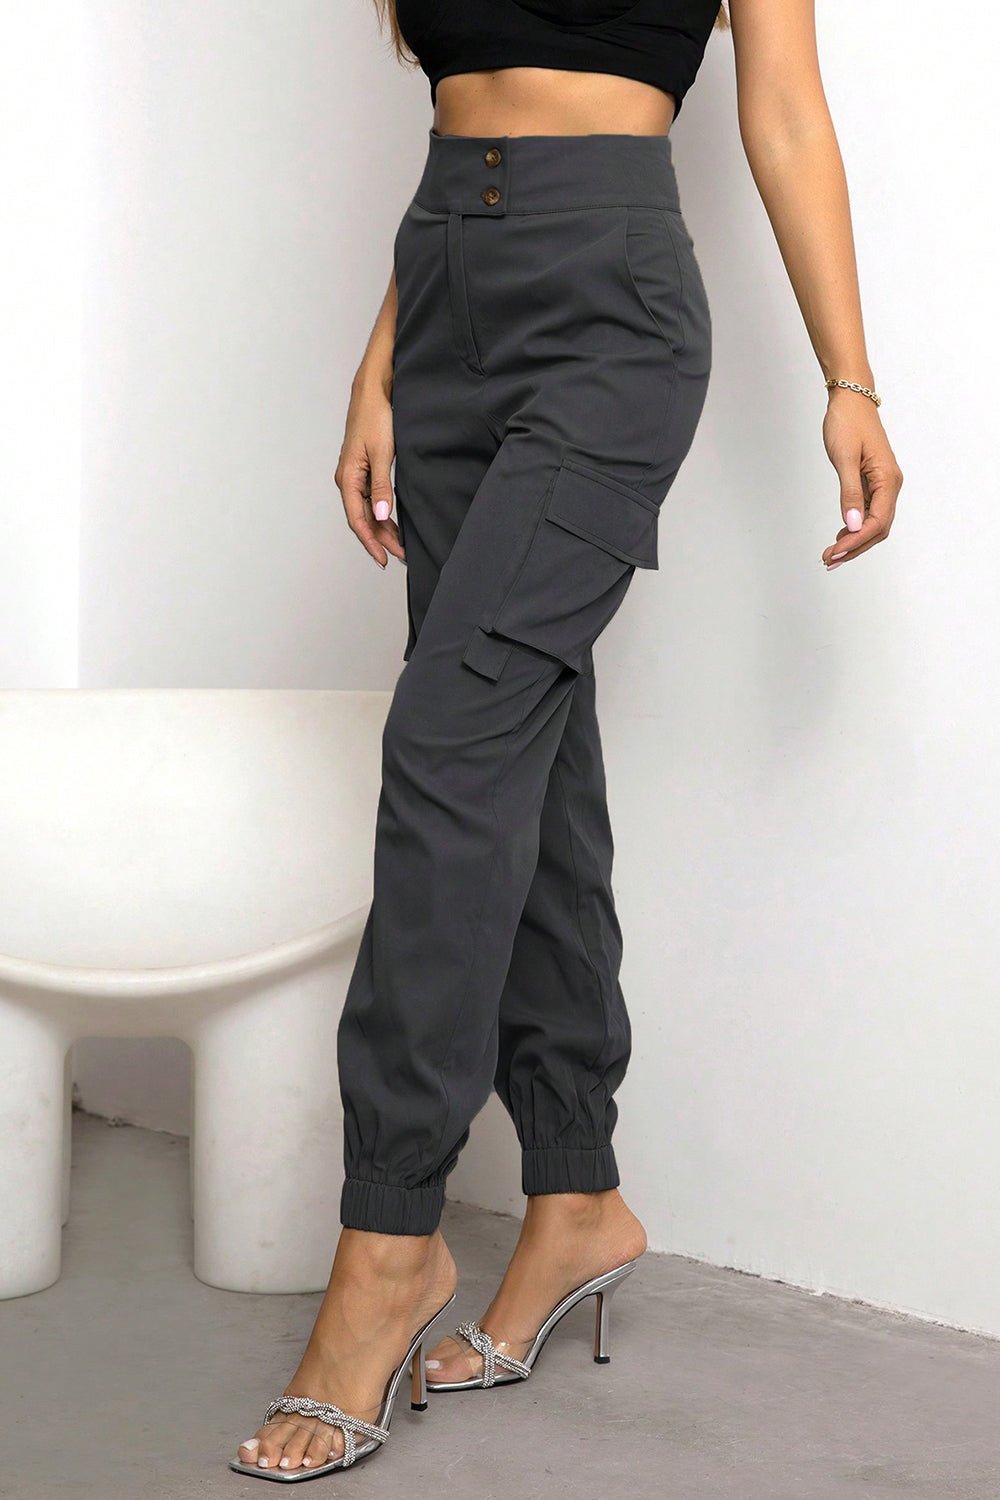 High Waist Cargo Pants - Fashion Girl Online Store